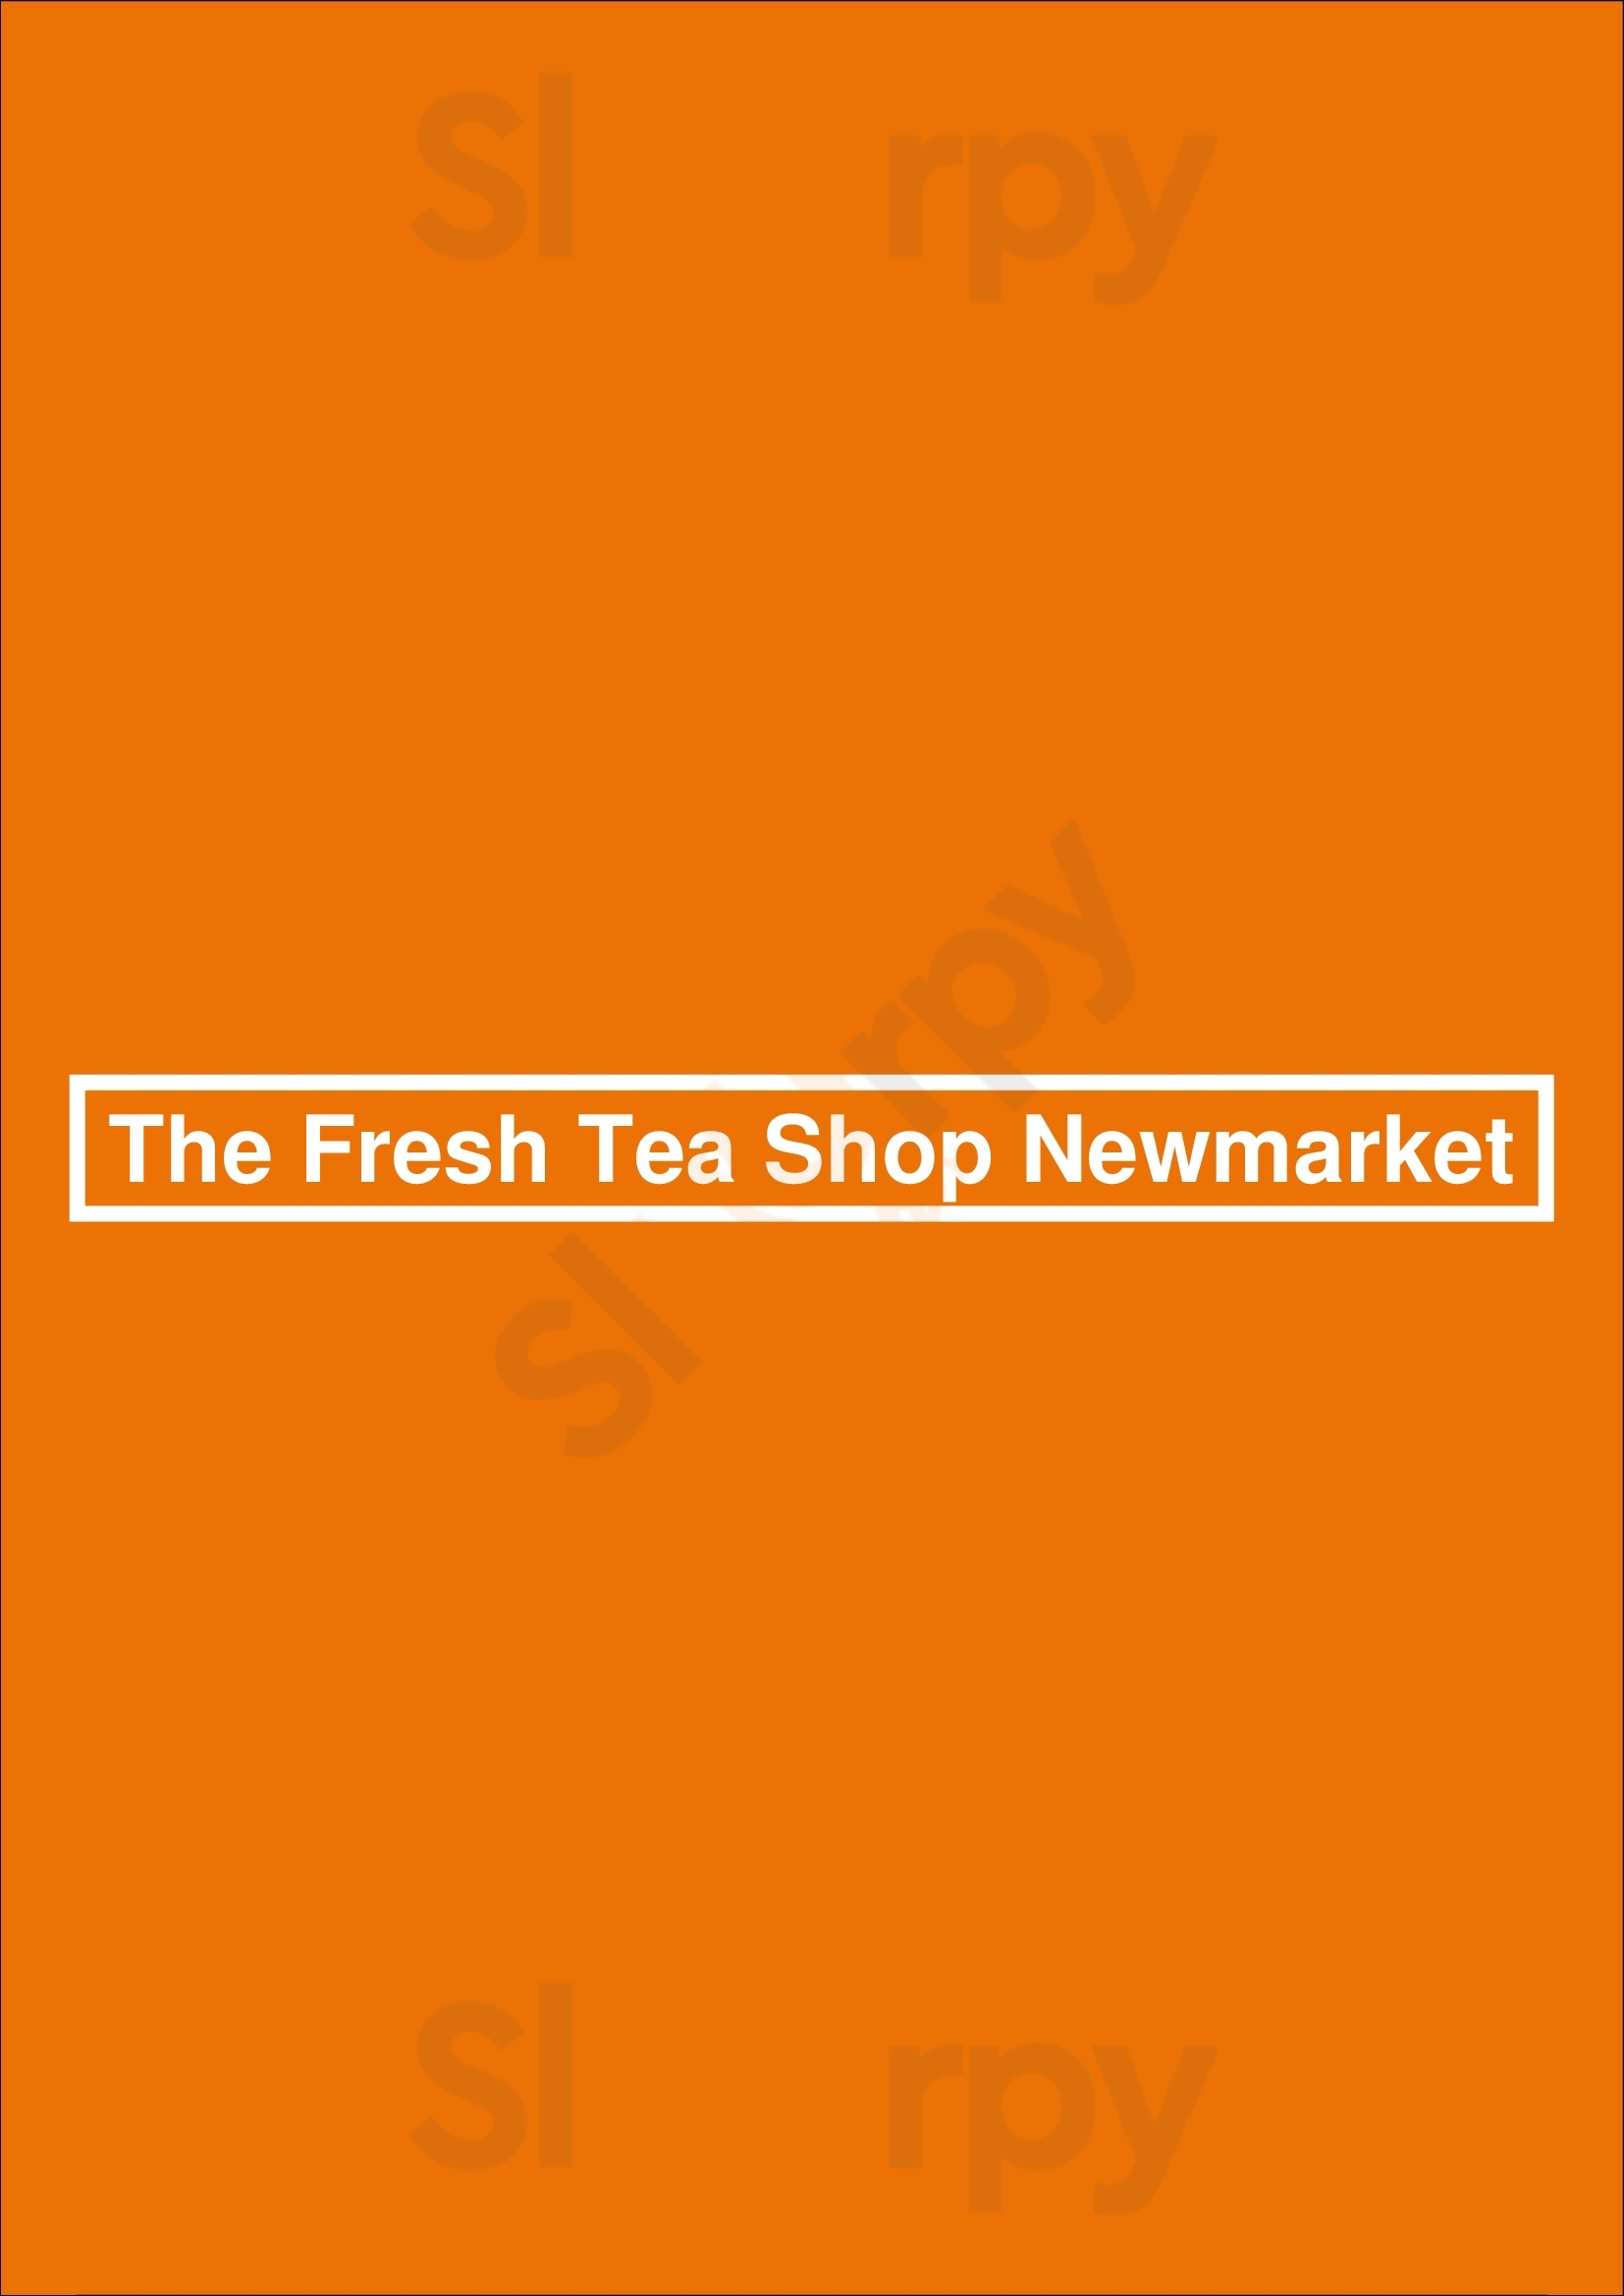 The Fresh Tea Shop Newmarket Newmarket Menu - 1